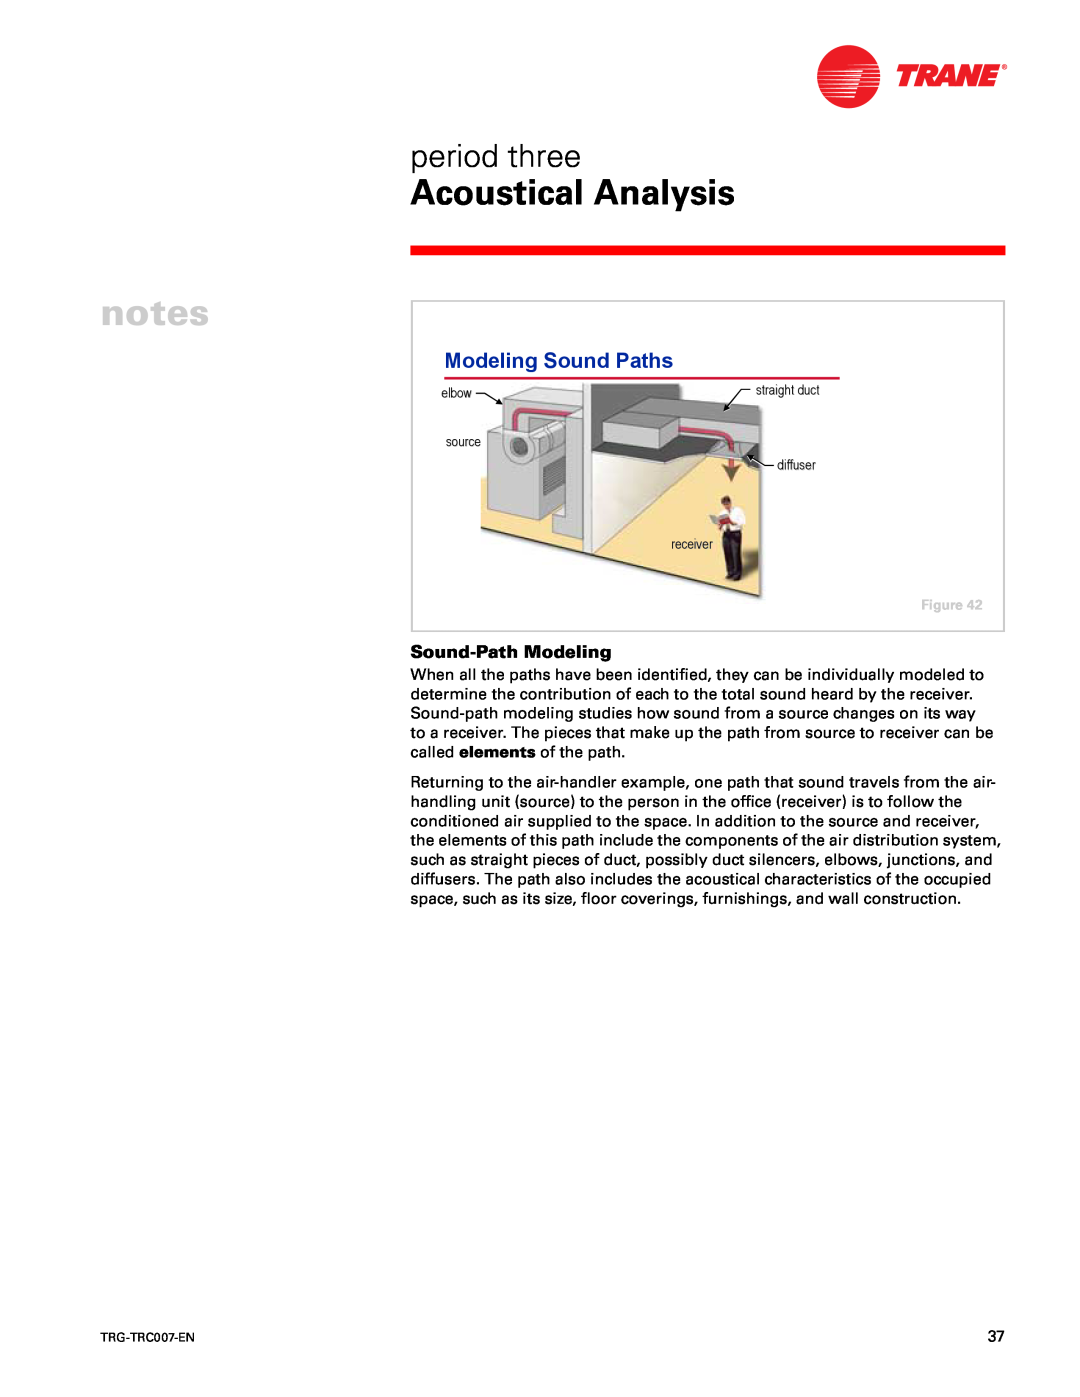 Trane TRG-TRC007-EN manual Modeling Sound Paths, Acoustical Analysis, period three, Sound-PathModeling 